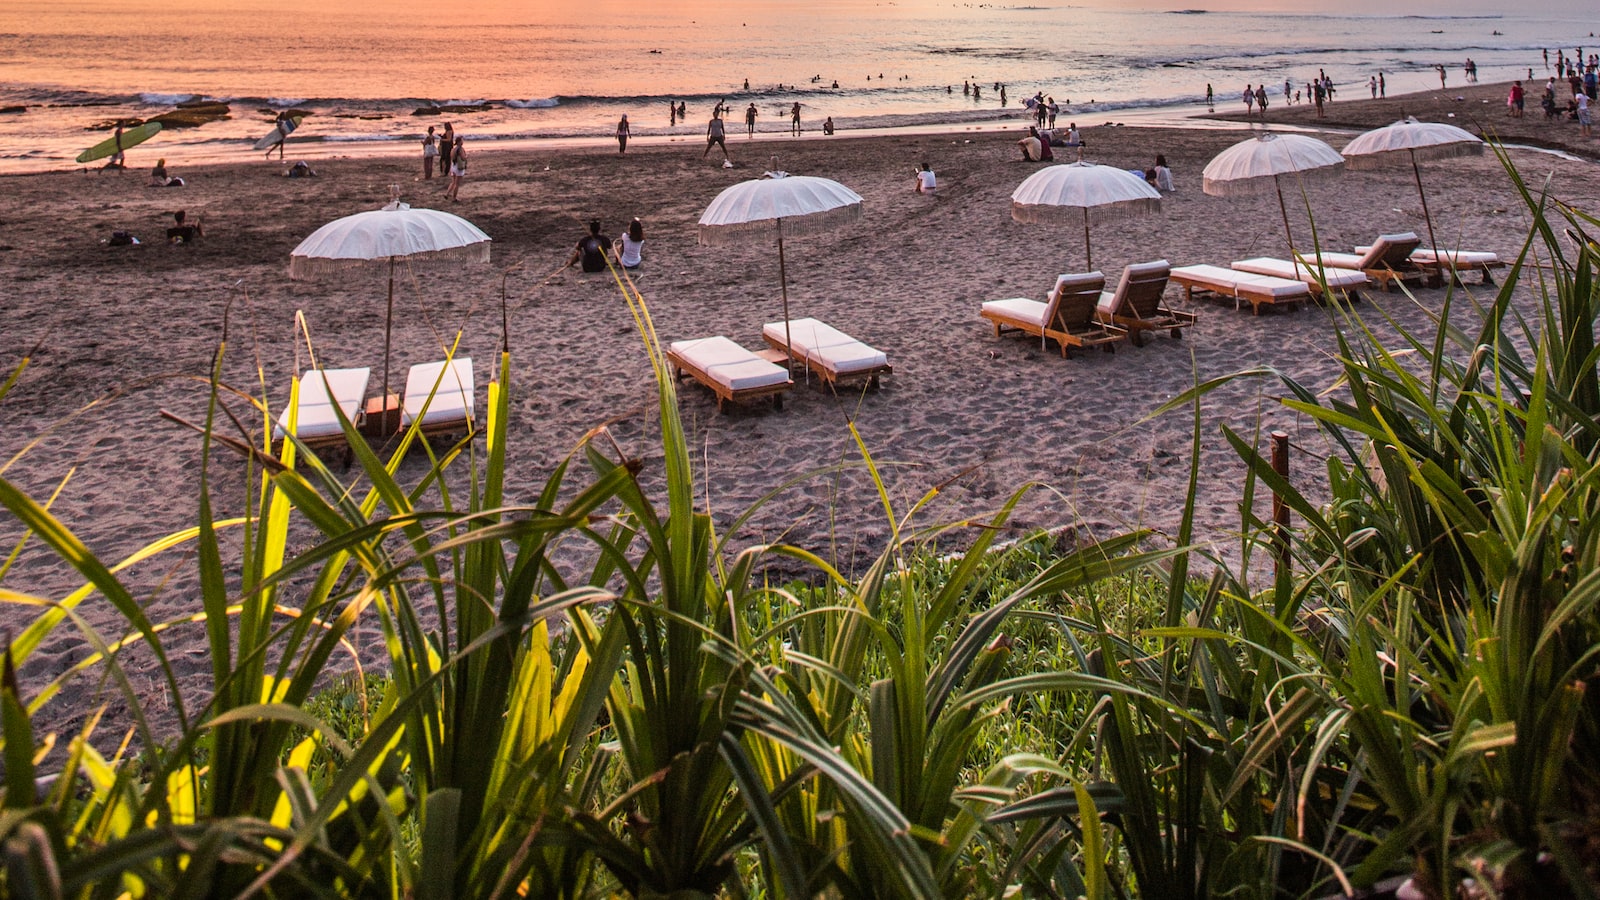 Bali’s Kuta Beach: The Ultimate Destination for New Year’s Eve Celebration